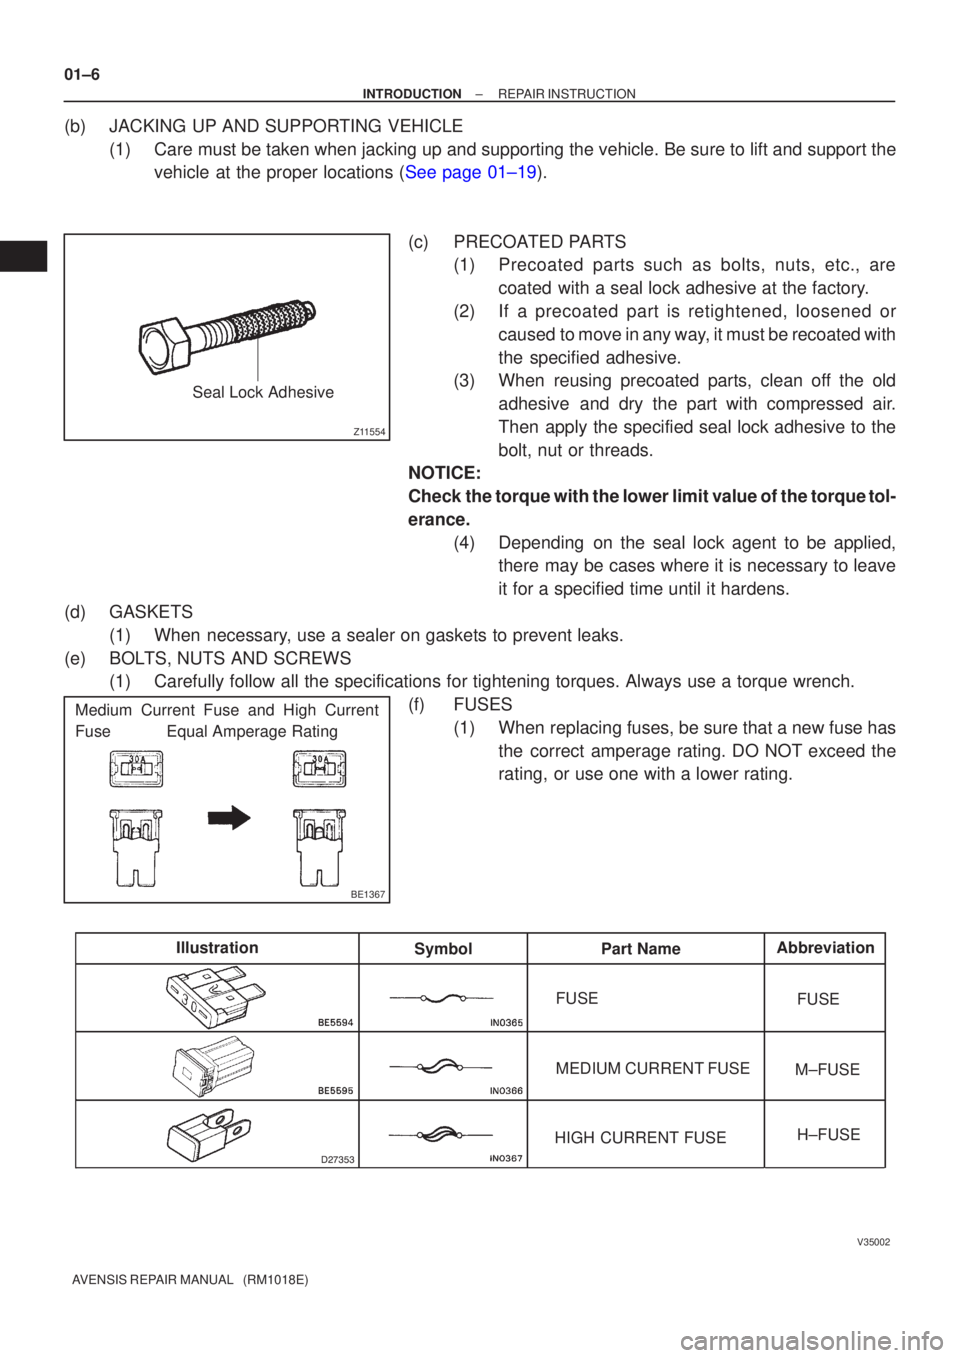 TOYOTA AVENSIS 2003  Service Repair Manual Z11554
Seal Lock Adhesive
BE1367
Medium Current Fuse and High Current
Fuse            Equal Amperage Rating

V35002
IllustrationSymbol Part Name Abbreviation
FUSE
MEDIUM CURRENT FUSE
HIGH CURREN